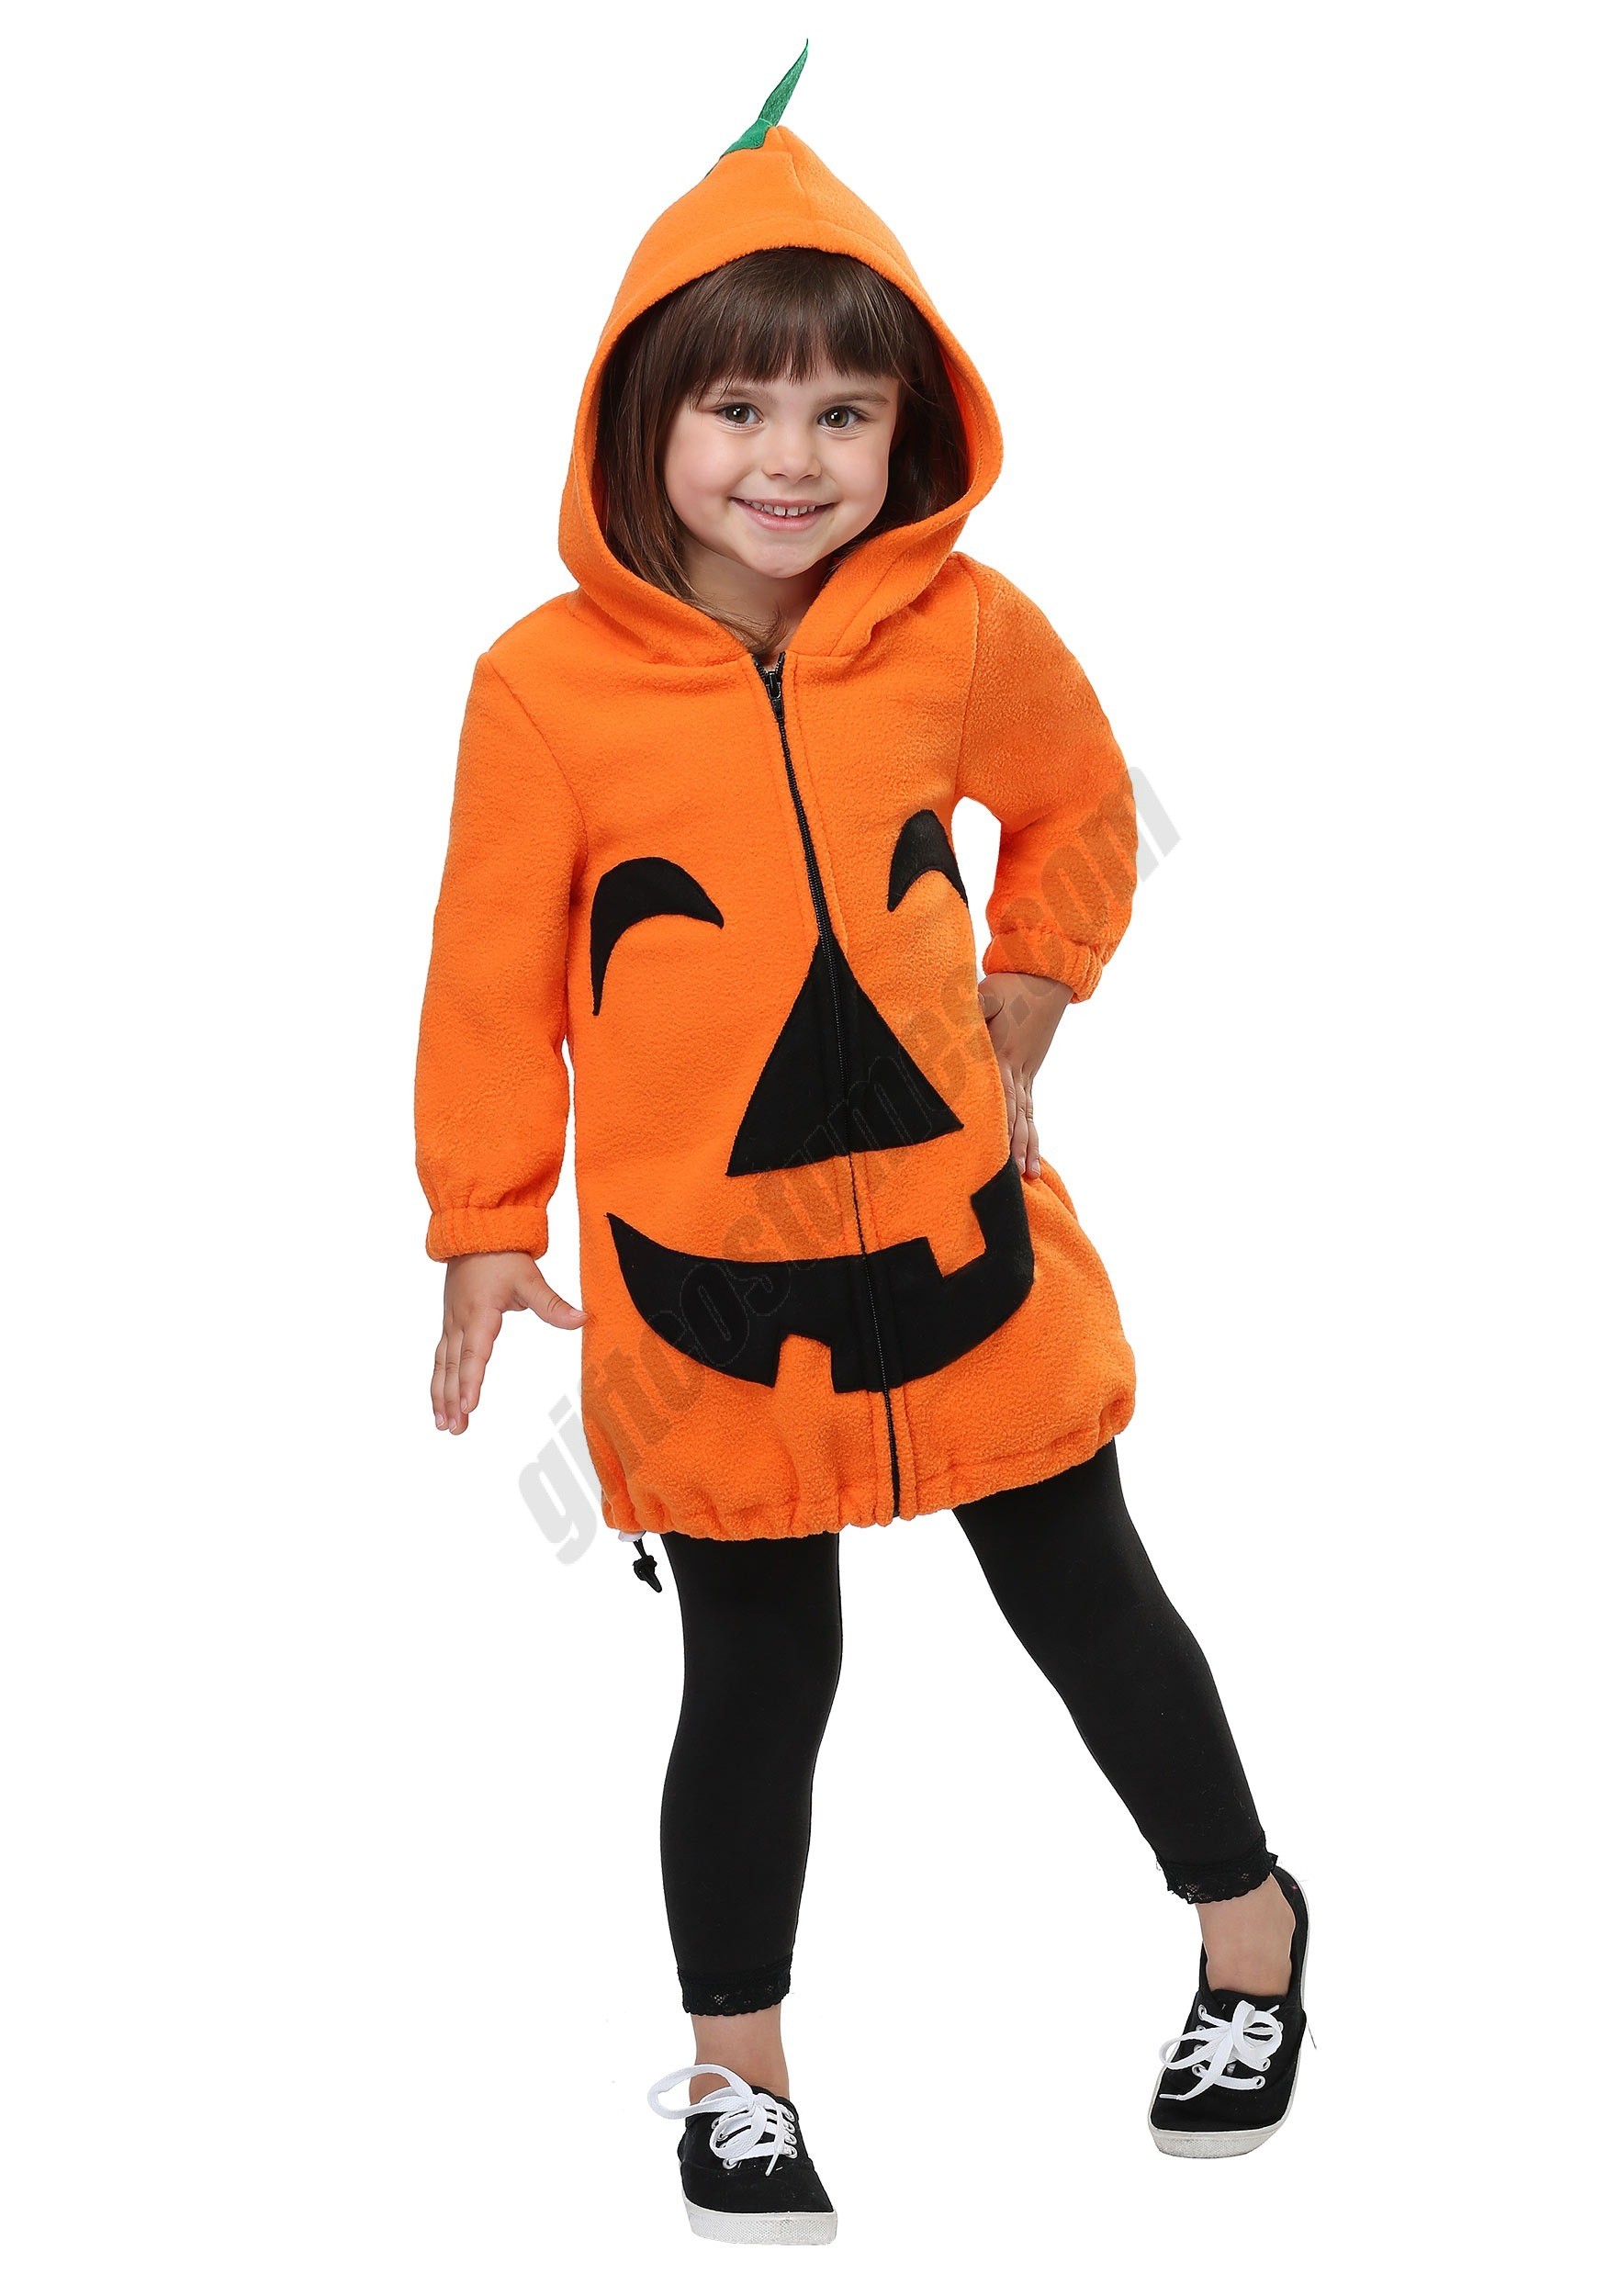 Playful Pumpkin Toddler Costume Promotions - Playful Pumpkin Toddler Costume Promotions